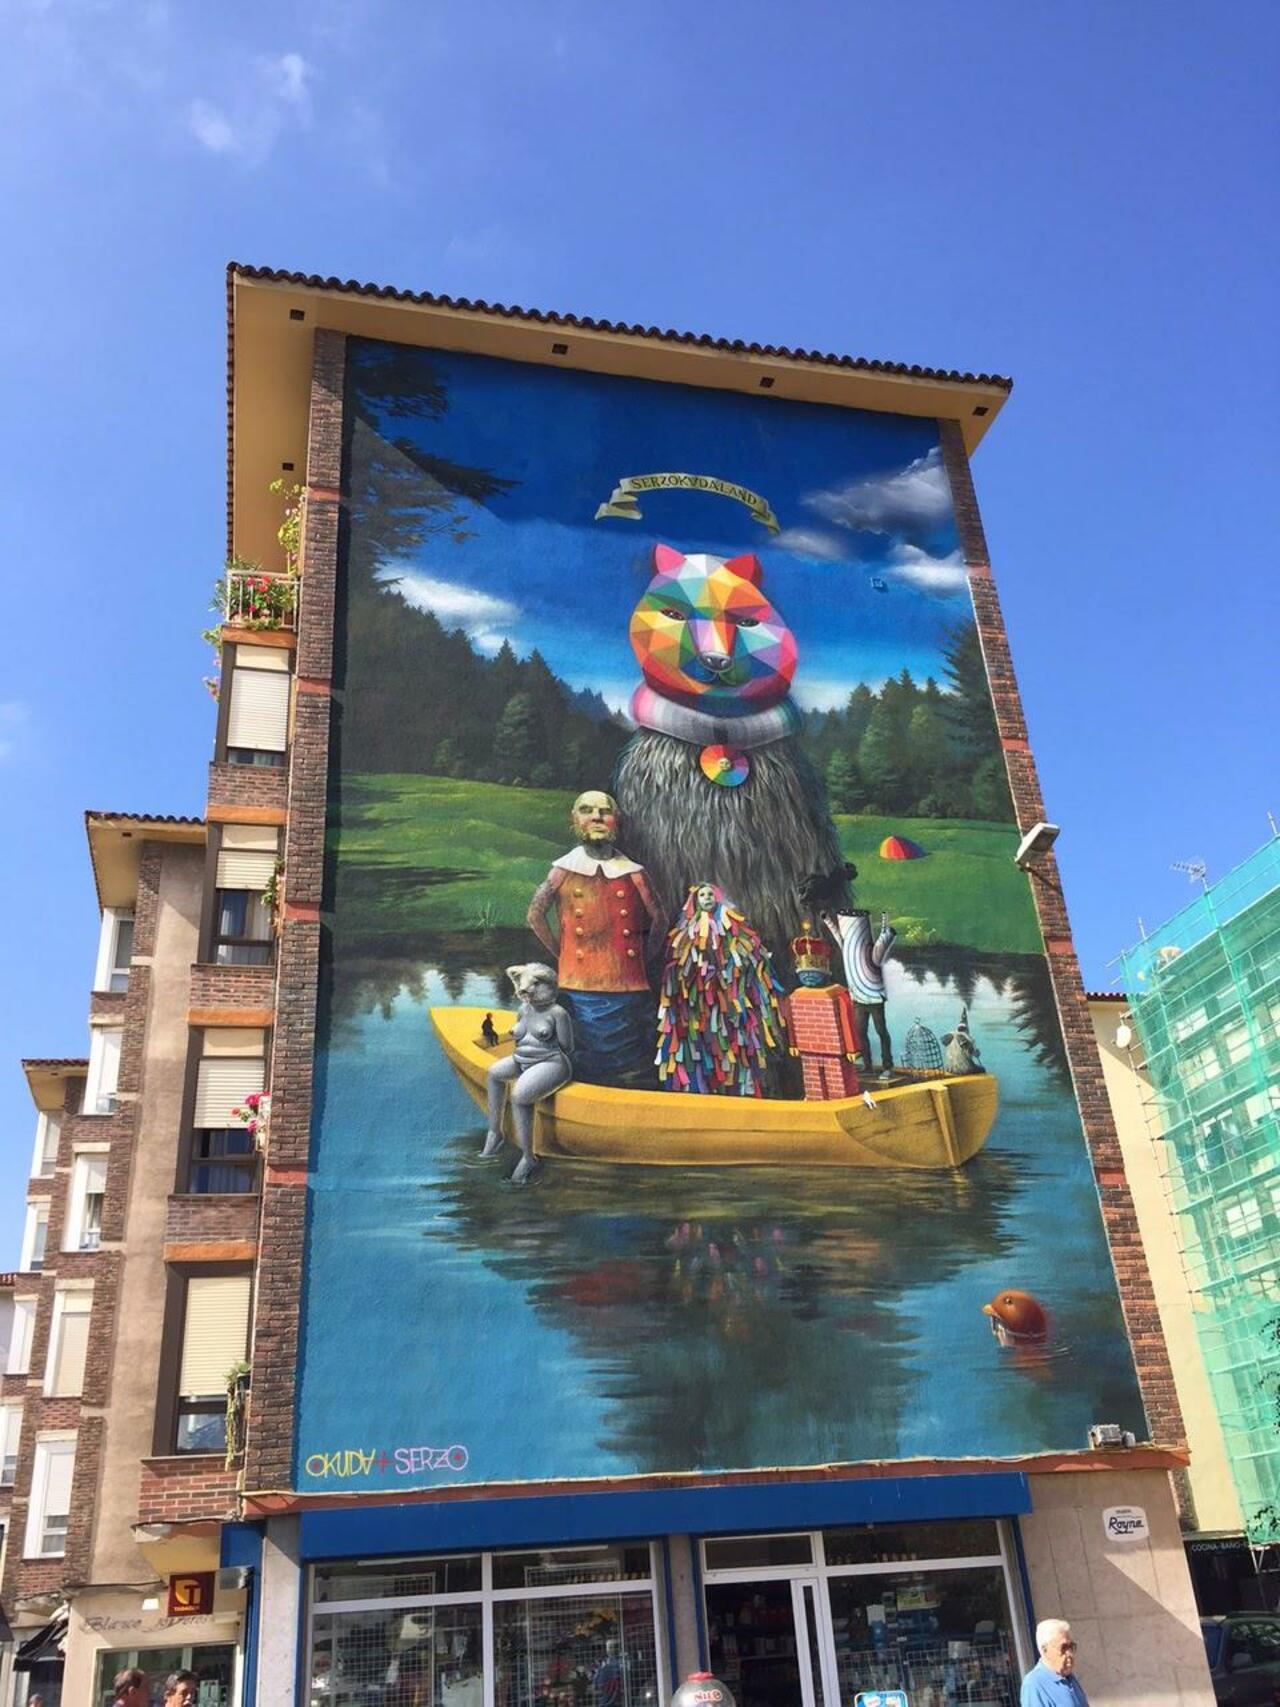 Okuda & Serzo collaborate on a large mural in Santander, Spain. #StreetArt #Graffiti #Mural http://t.co/Fmc3FhMJLX